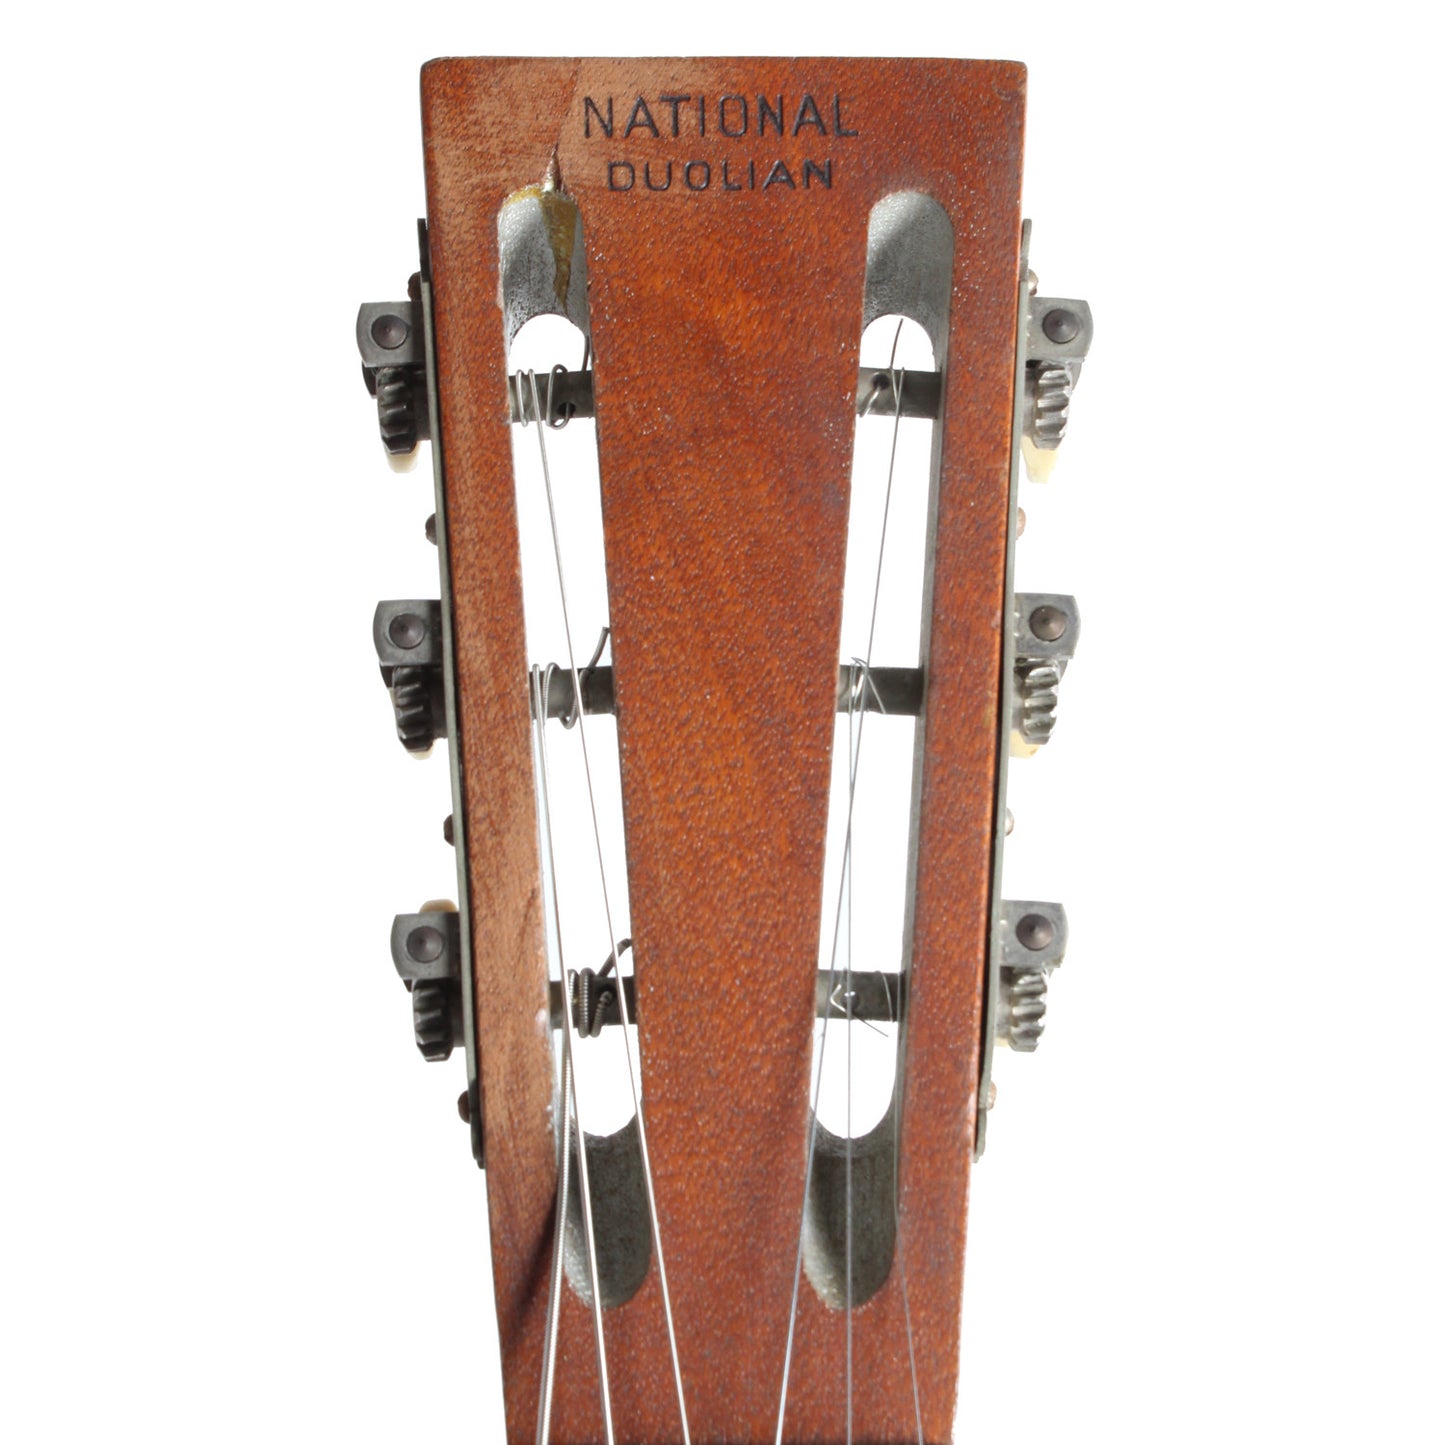 1932 National Duolian - Garrett Park Guitars
 - 7